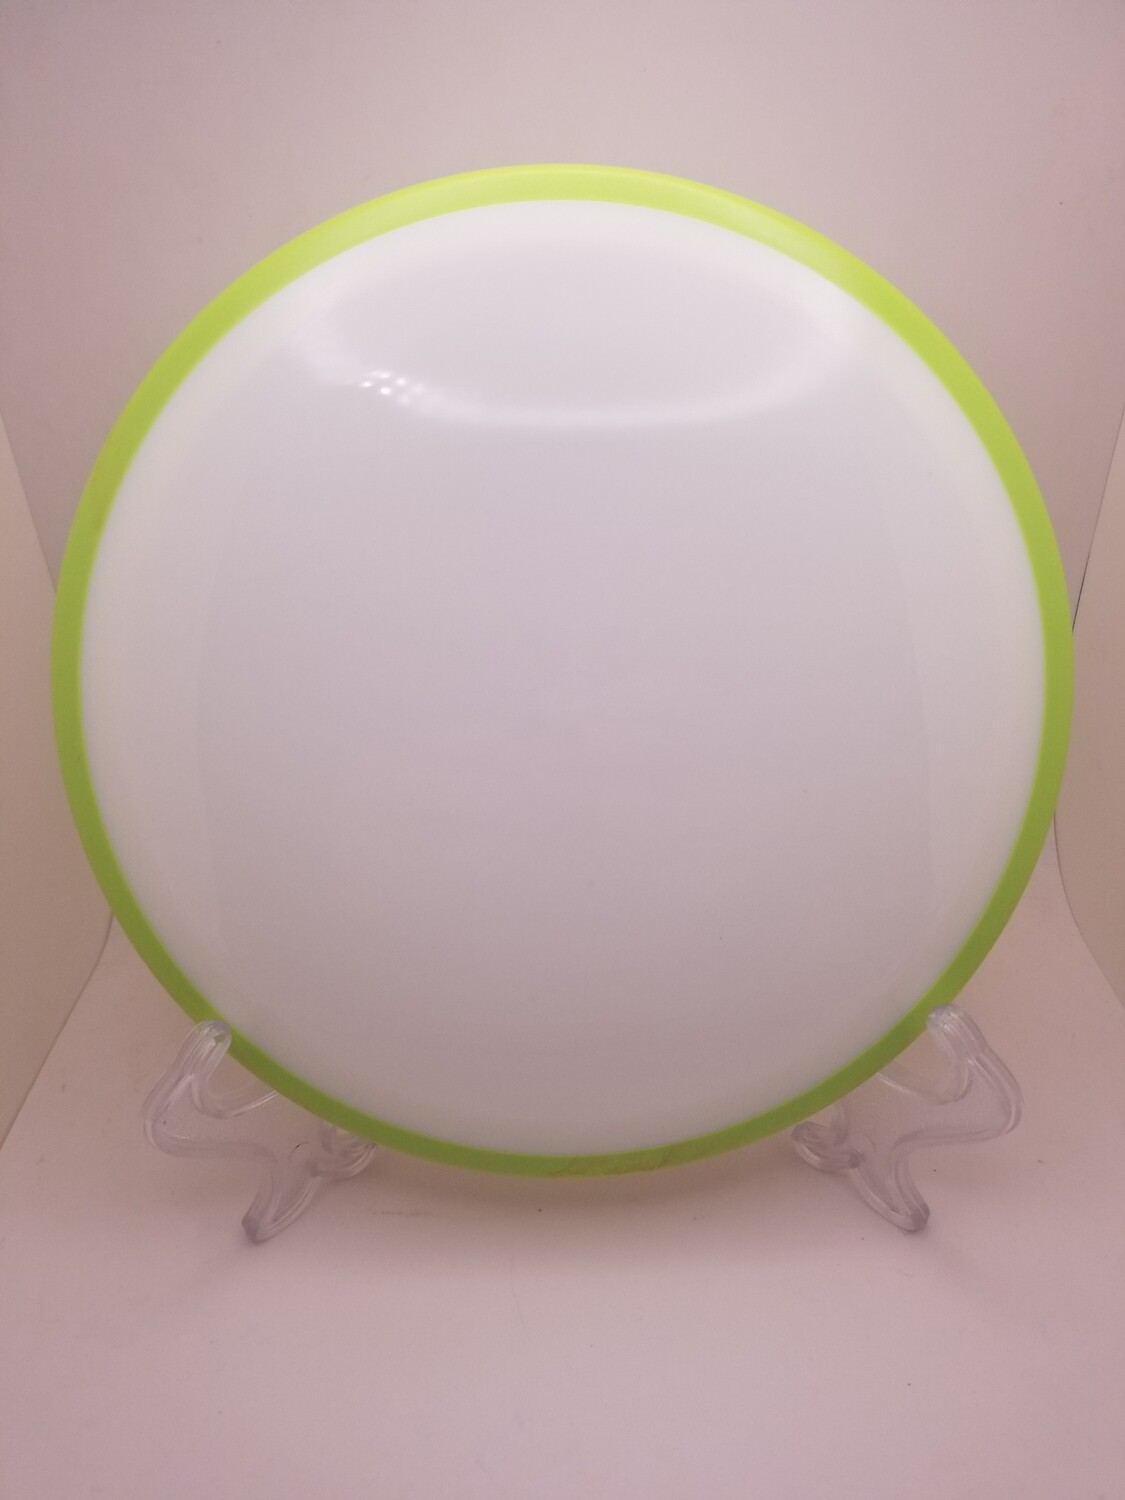 Dyer's Delight Axiom Discs Crave White Blank with Green Rim Neutron 170-175g g